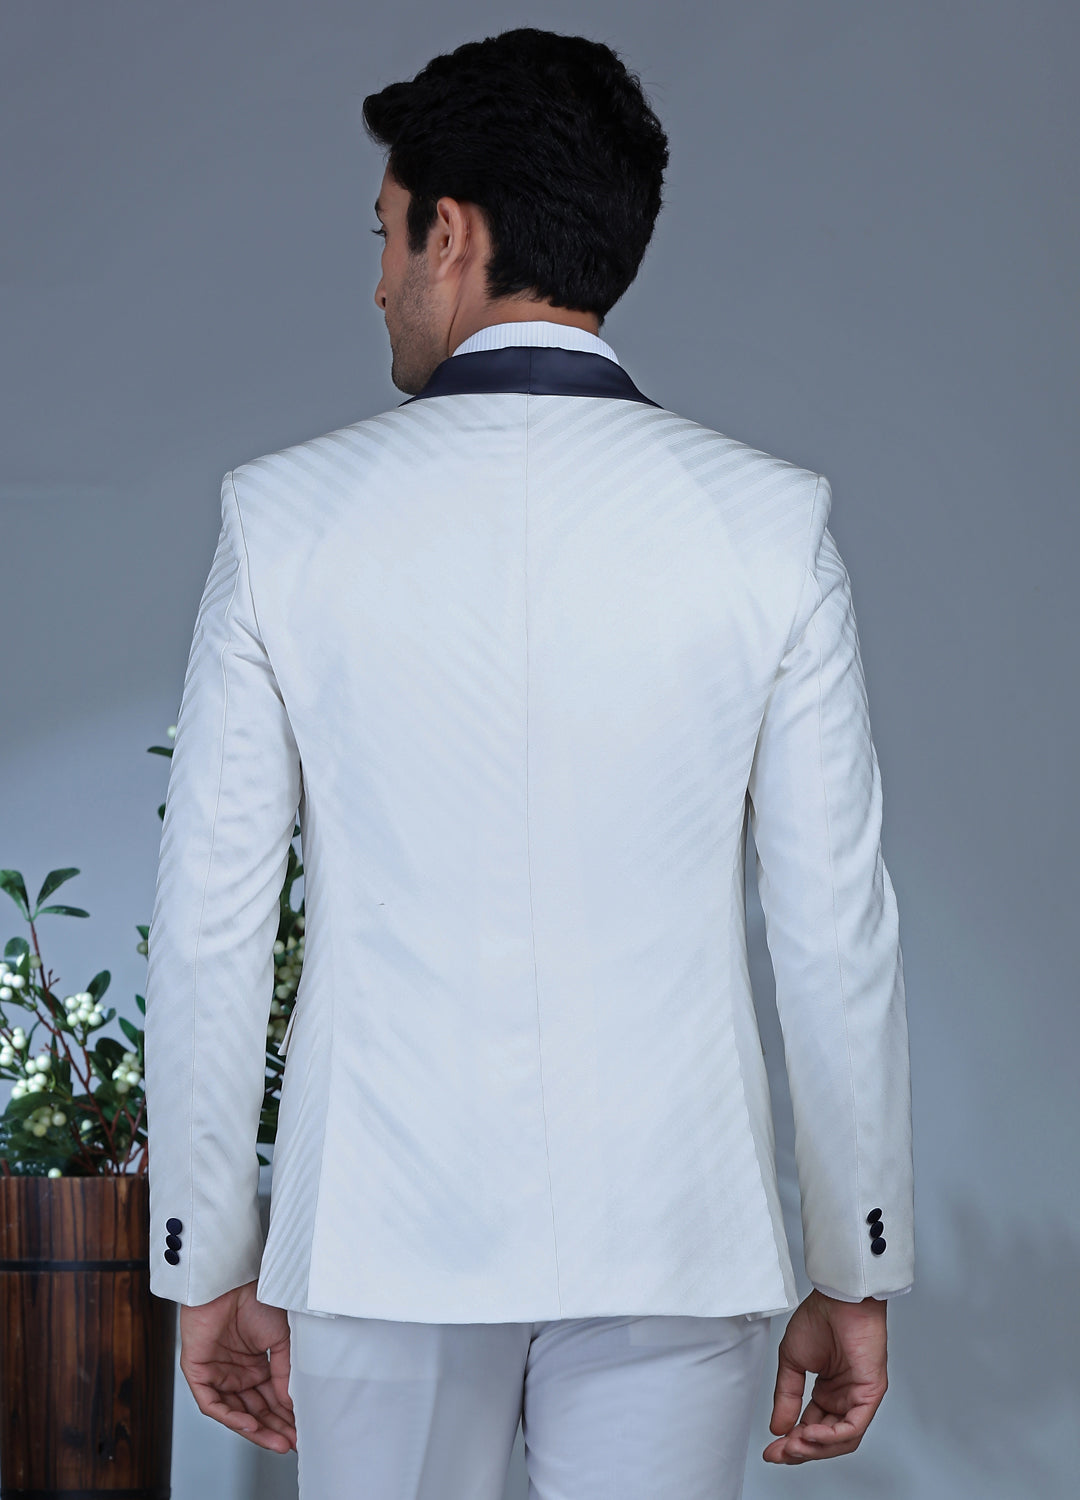 Contemporary White Tuxedo Suit